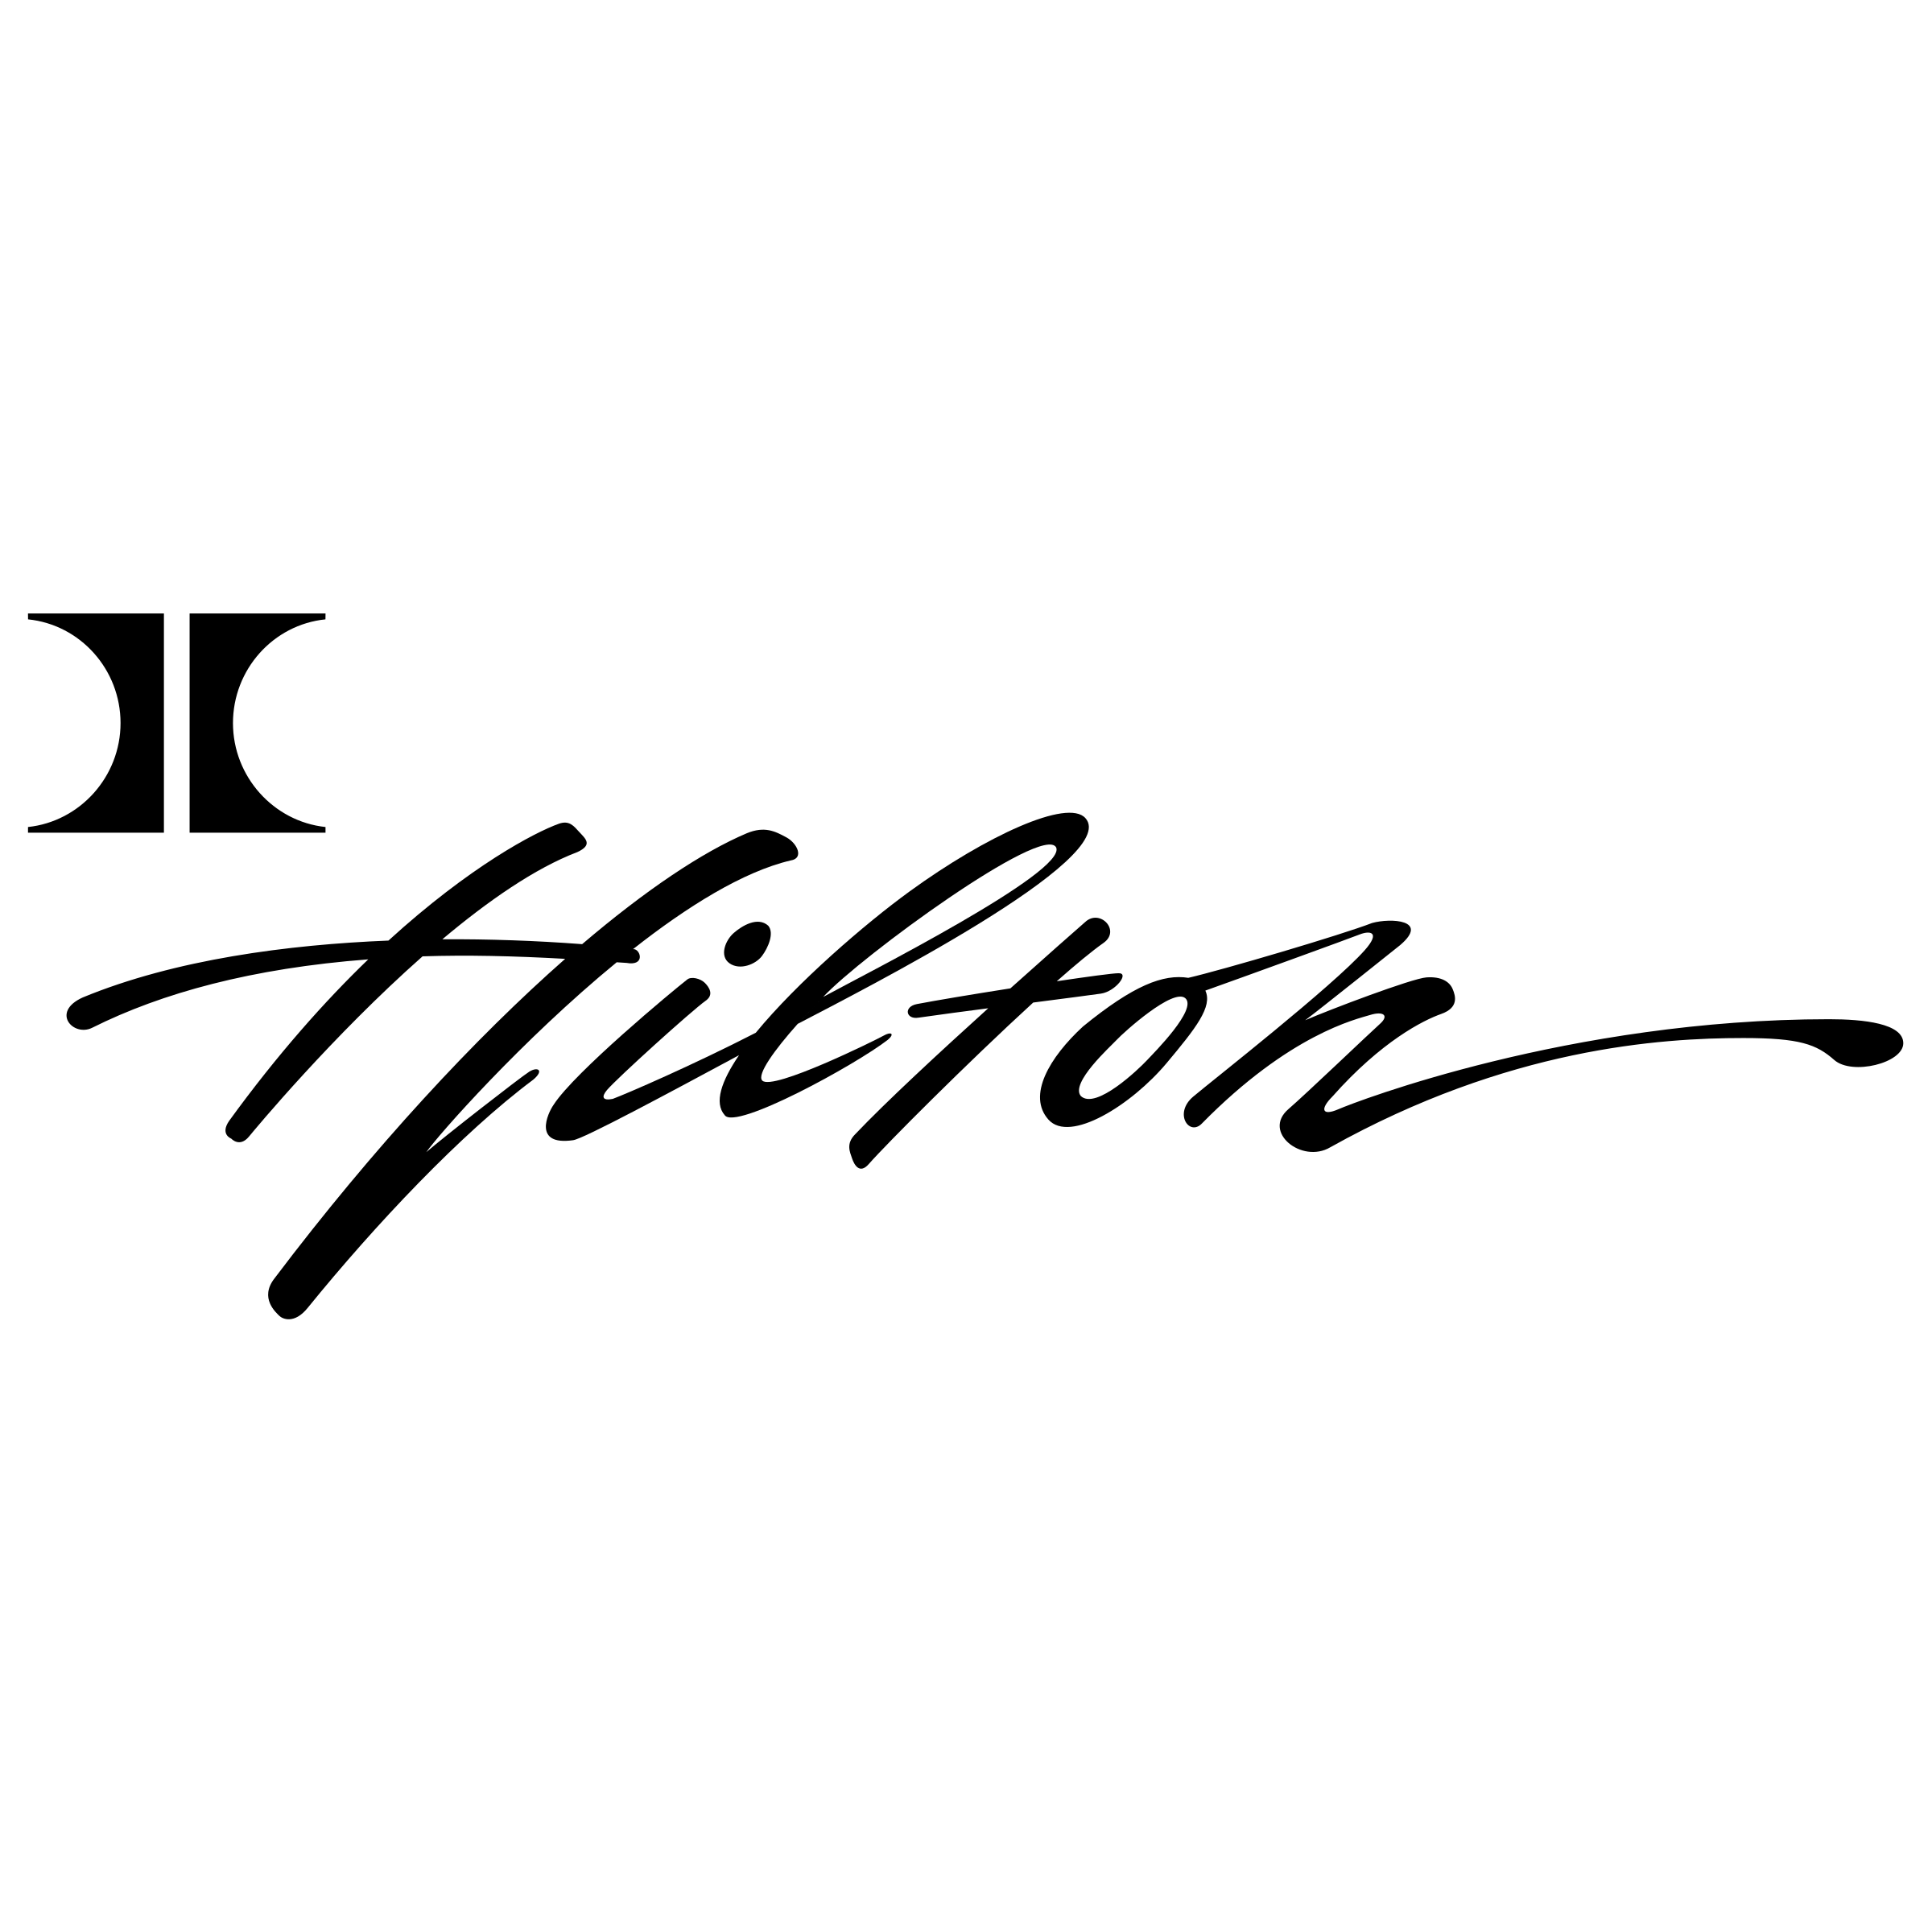 Hilton Logo - Hilton Logo PNG Transparent & SVG Vector - Freebie Supply